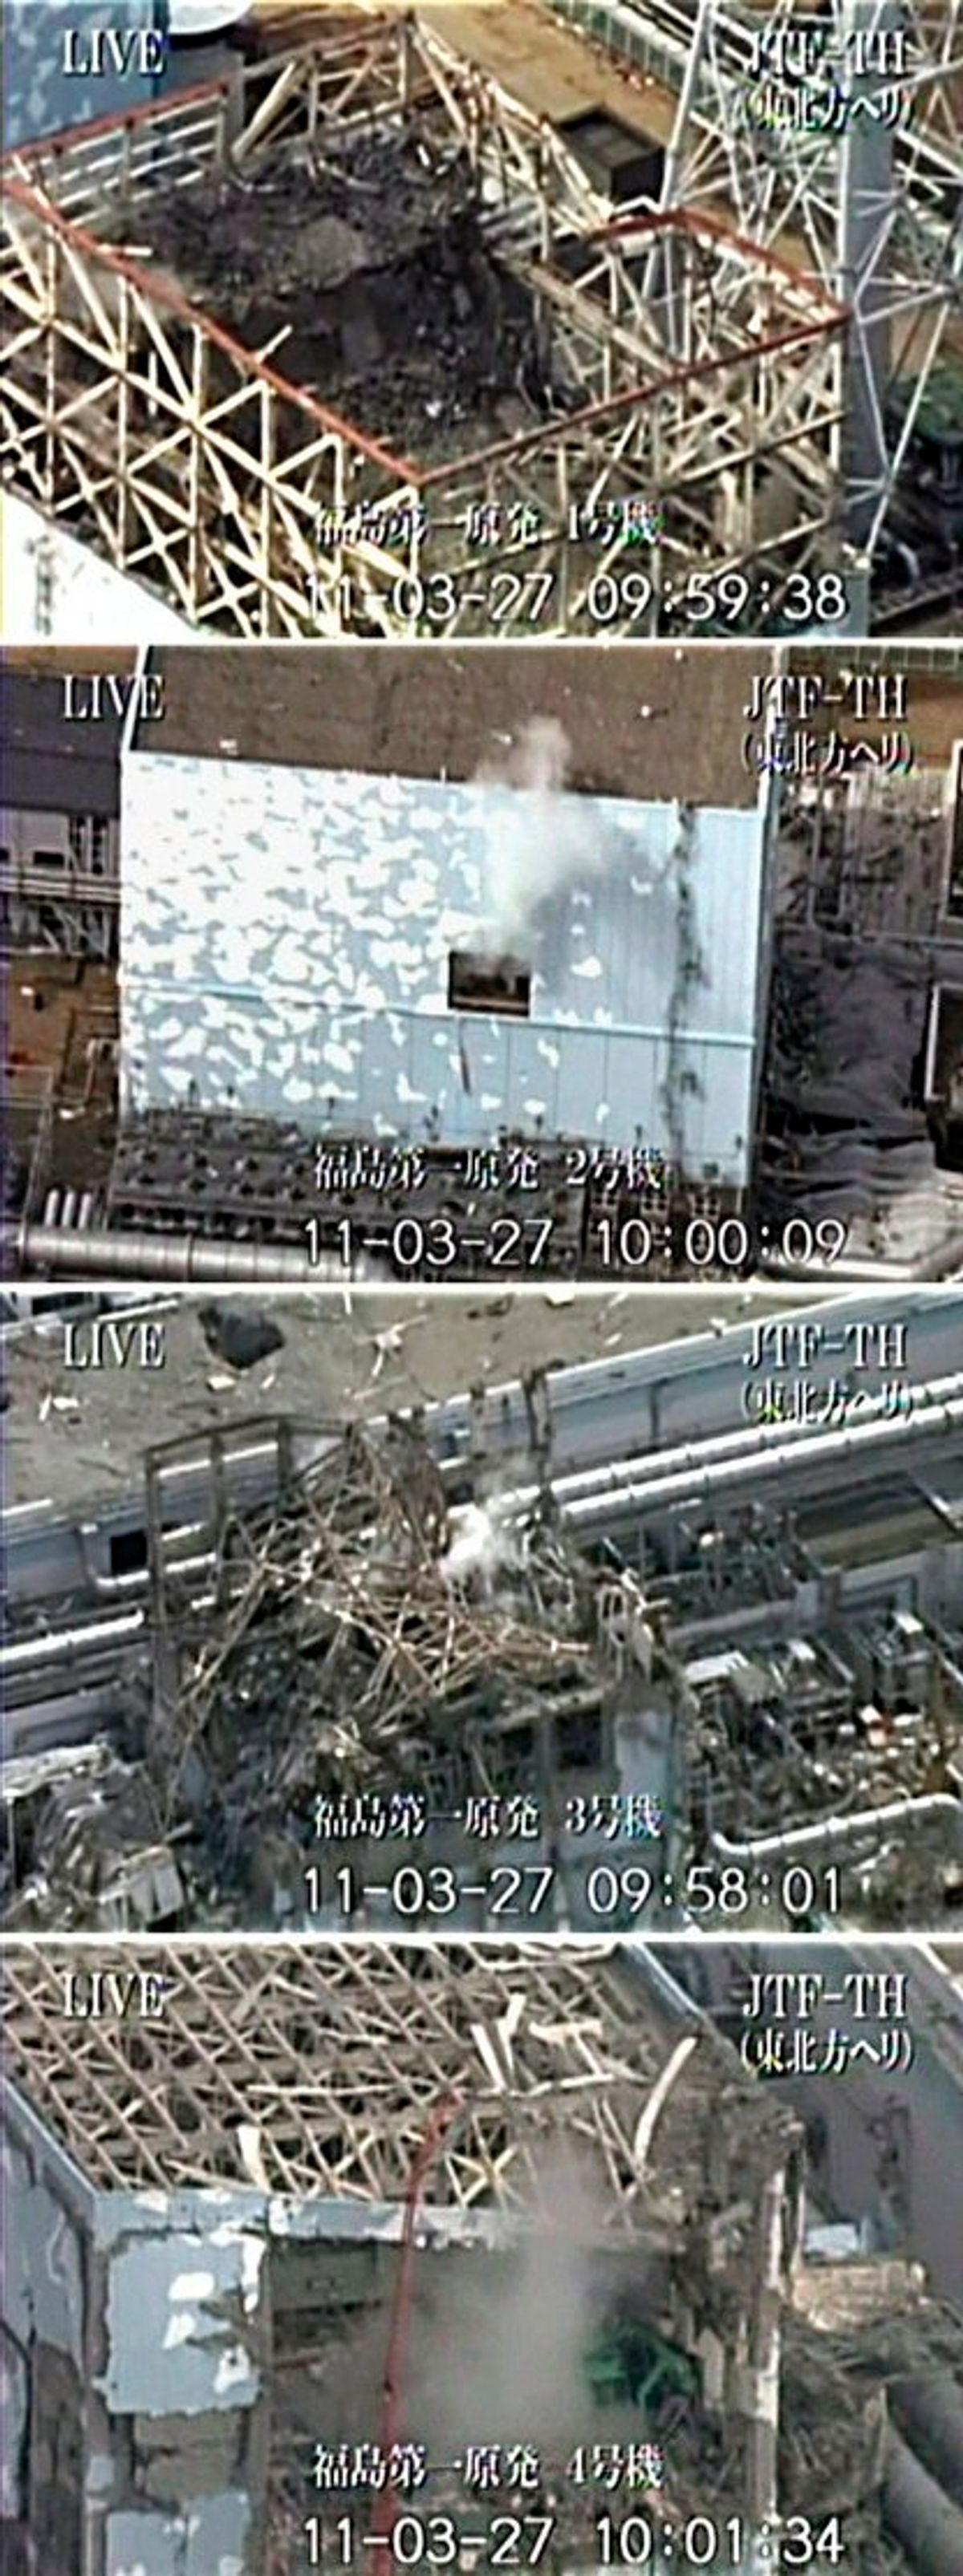 Contaminated Water Discovered in Tunnels at Fukushima Plant